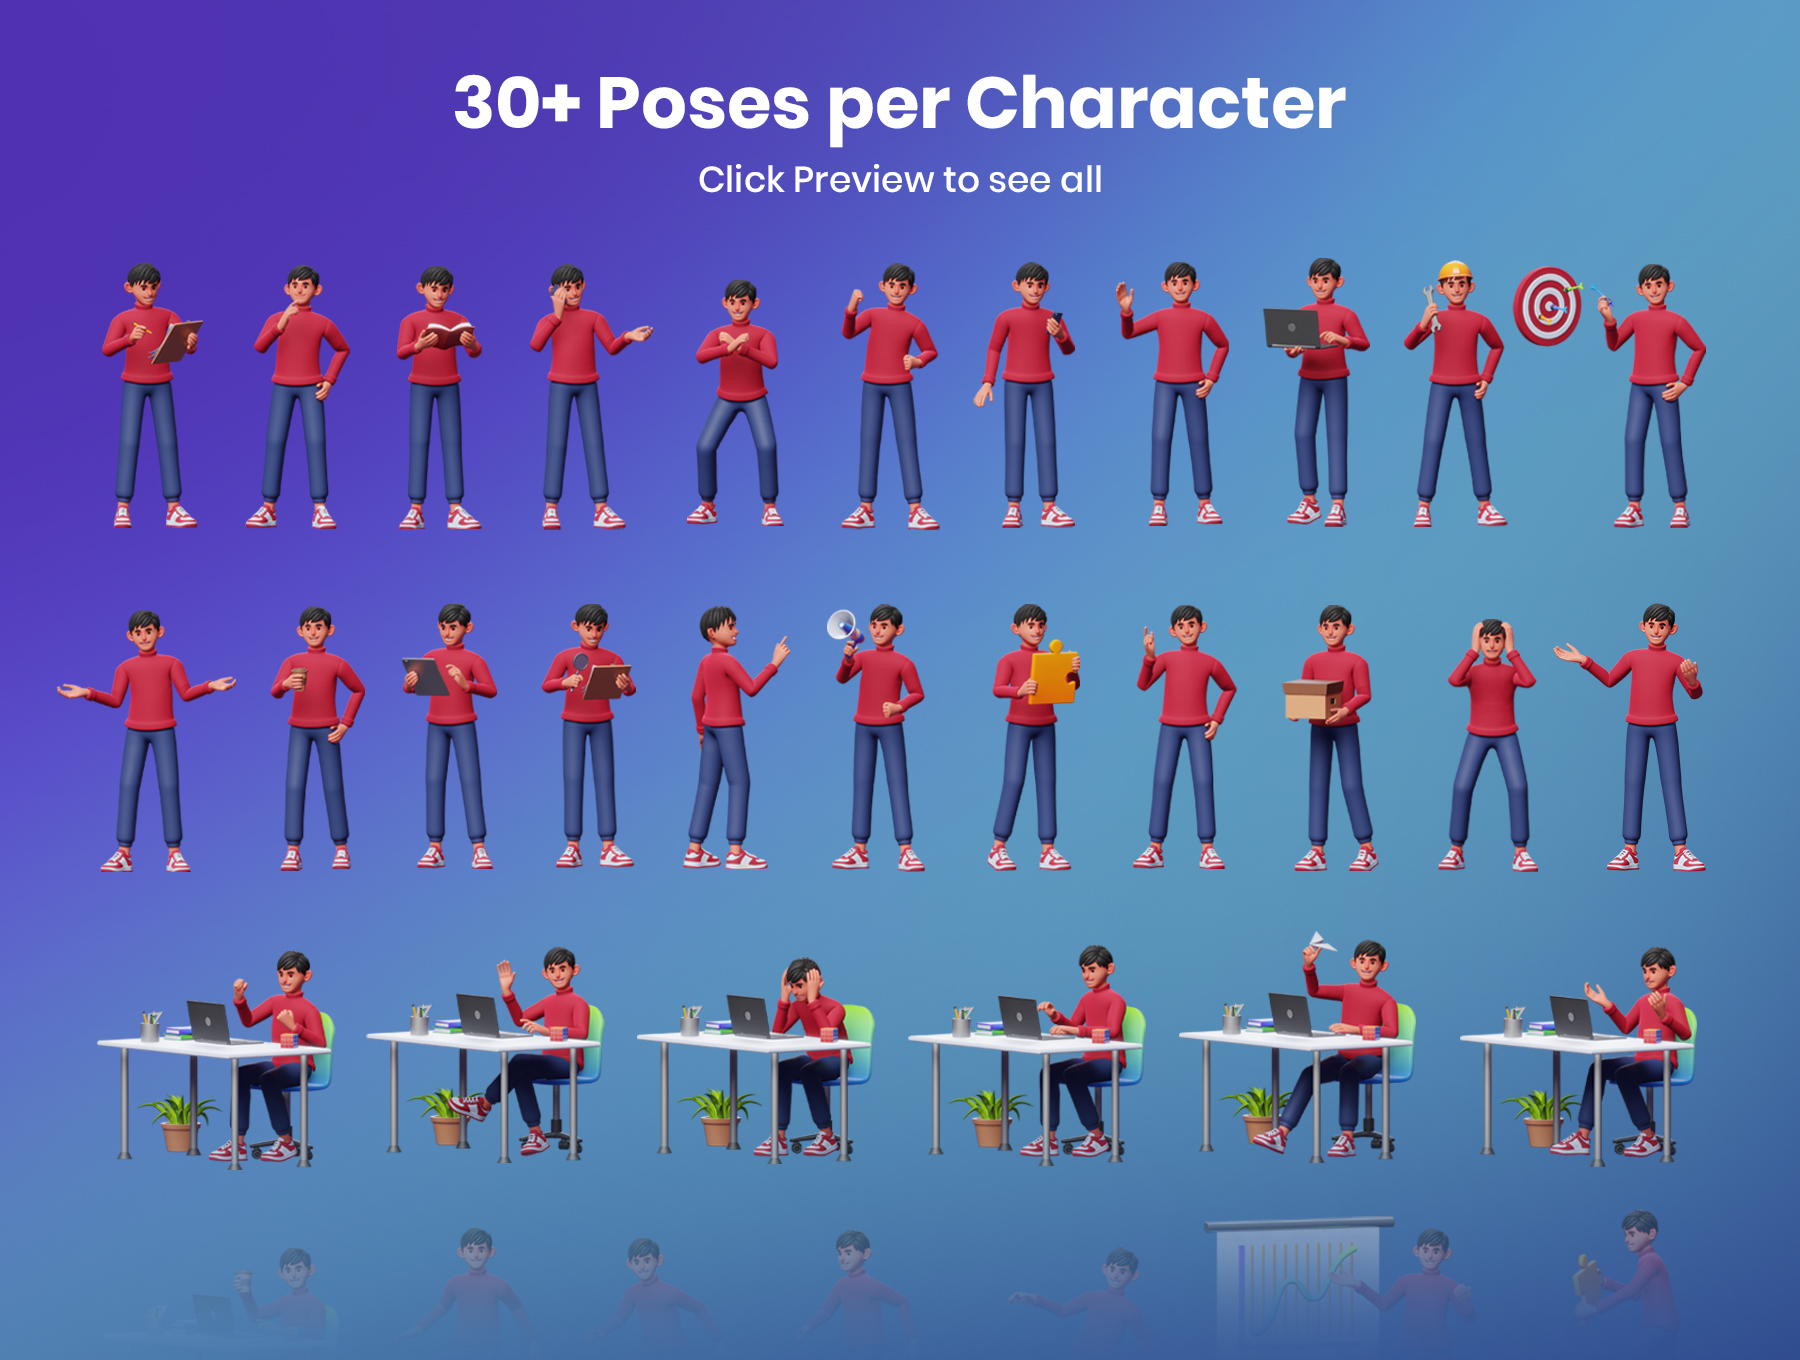 1122 3D男女角色工作办公场景多姿势网页app应用演示插画模型 3D Characters Work Activity